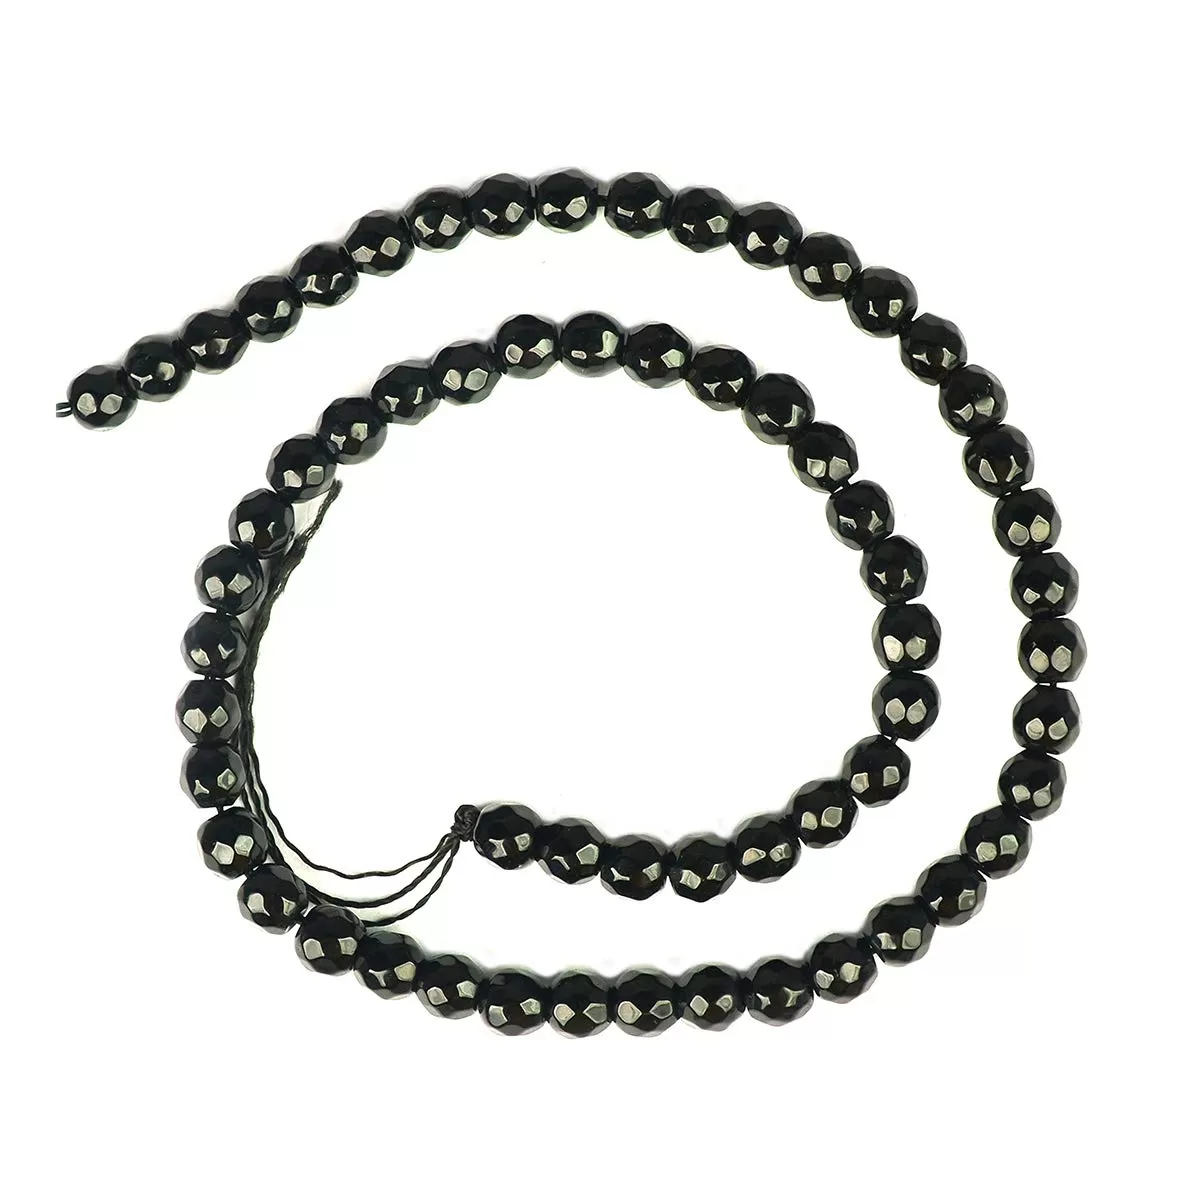 Black Onyx Loose Beads Diamond Cut 6 mm Stone Beads for Jewellery Making Bracelet Beads Mala Beads Crystal Beads for Jewellery Making Necklace/Bracelet/Mala